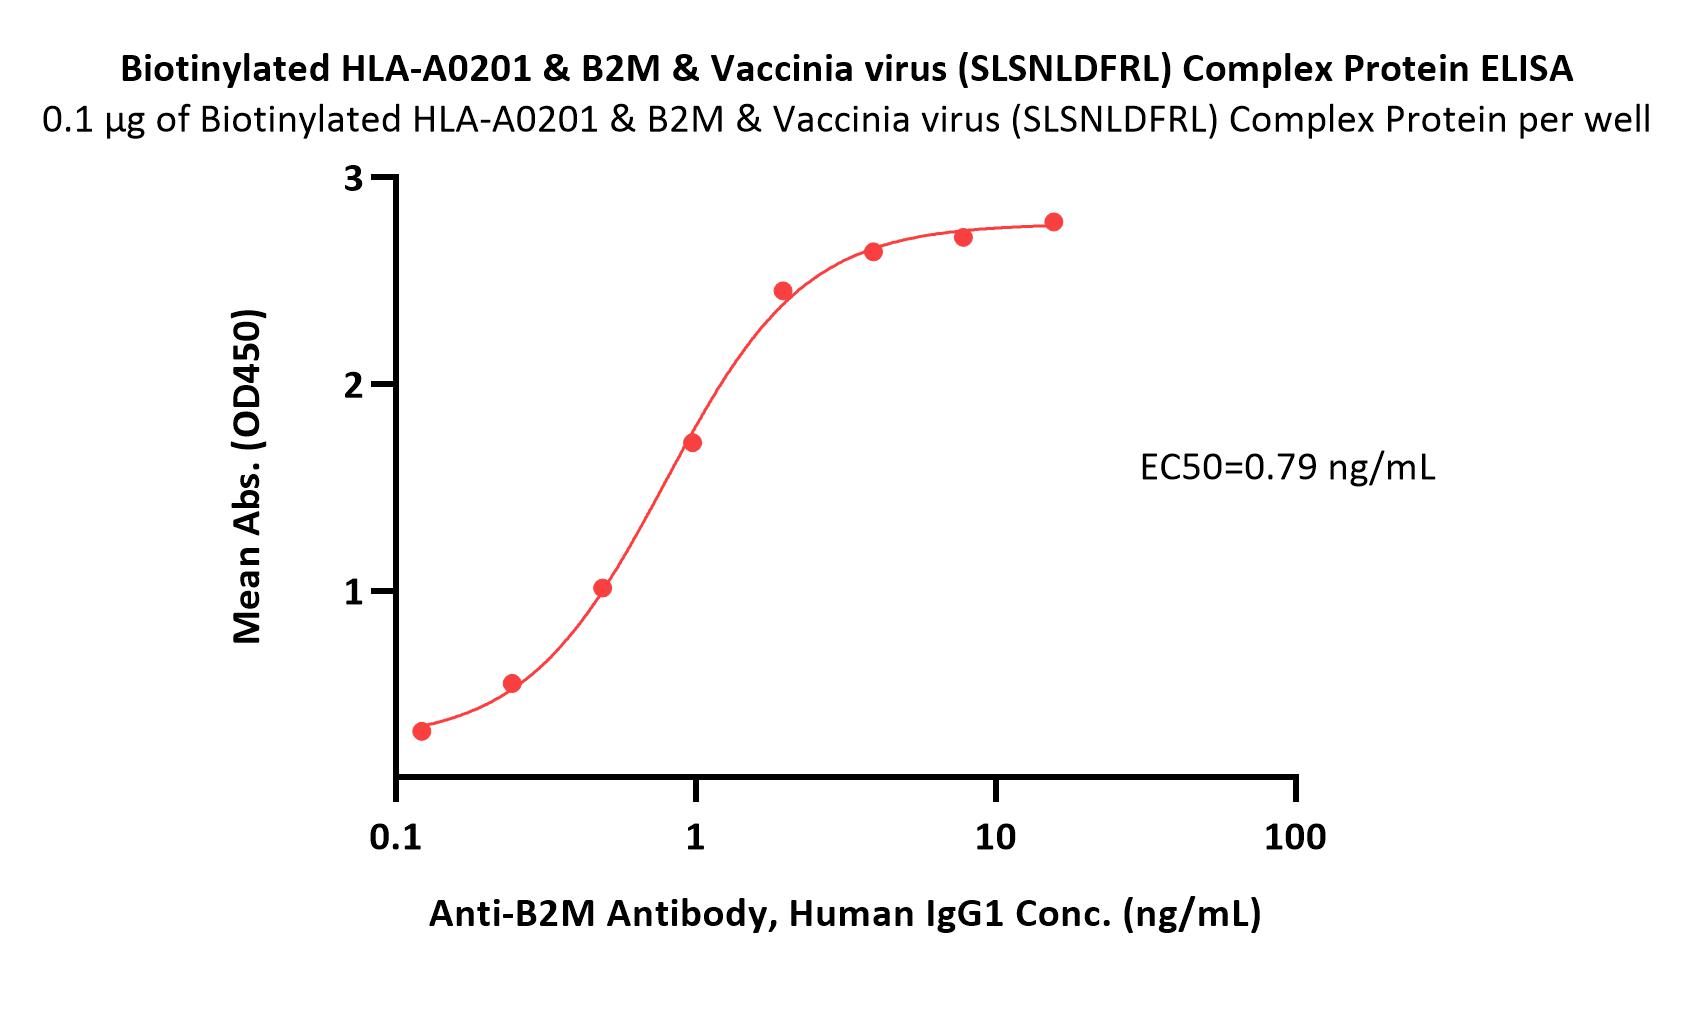 HLA-A*0201 & B2M & Vaccinia virus (SLSNLDFRL) ELISA